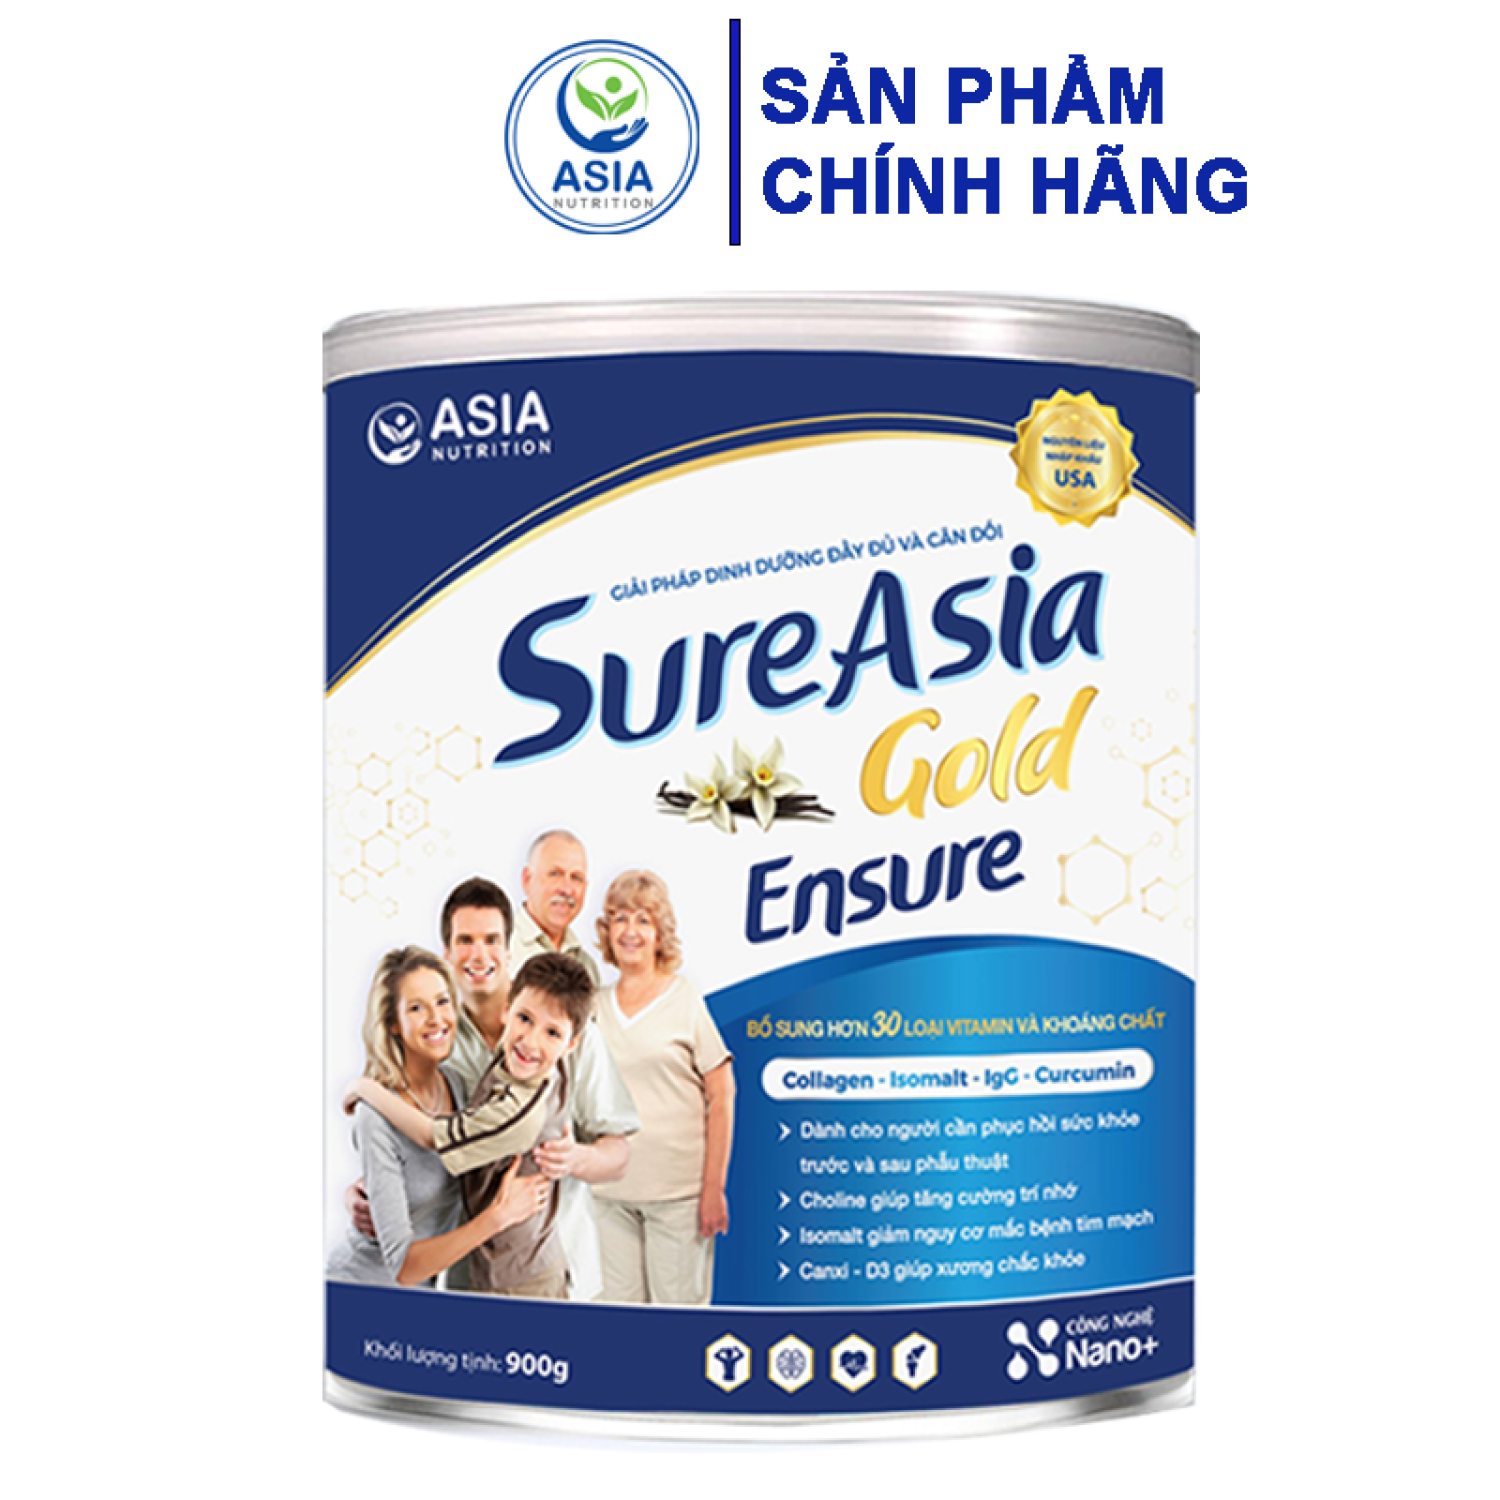 Sữa bột Sure Asia Gold Ensure 900g cao cấp nguyên liệu nhập khẩu từ Hoa Kỳ